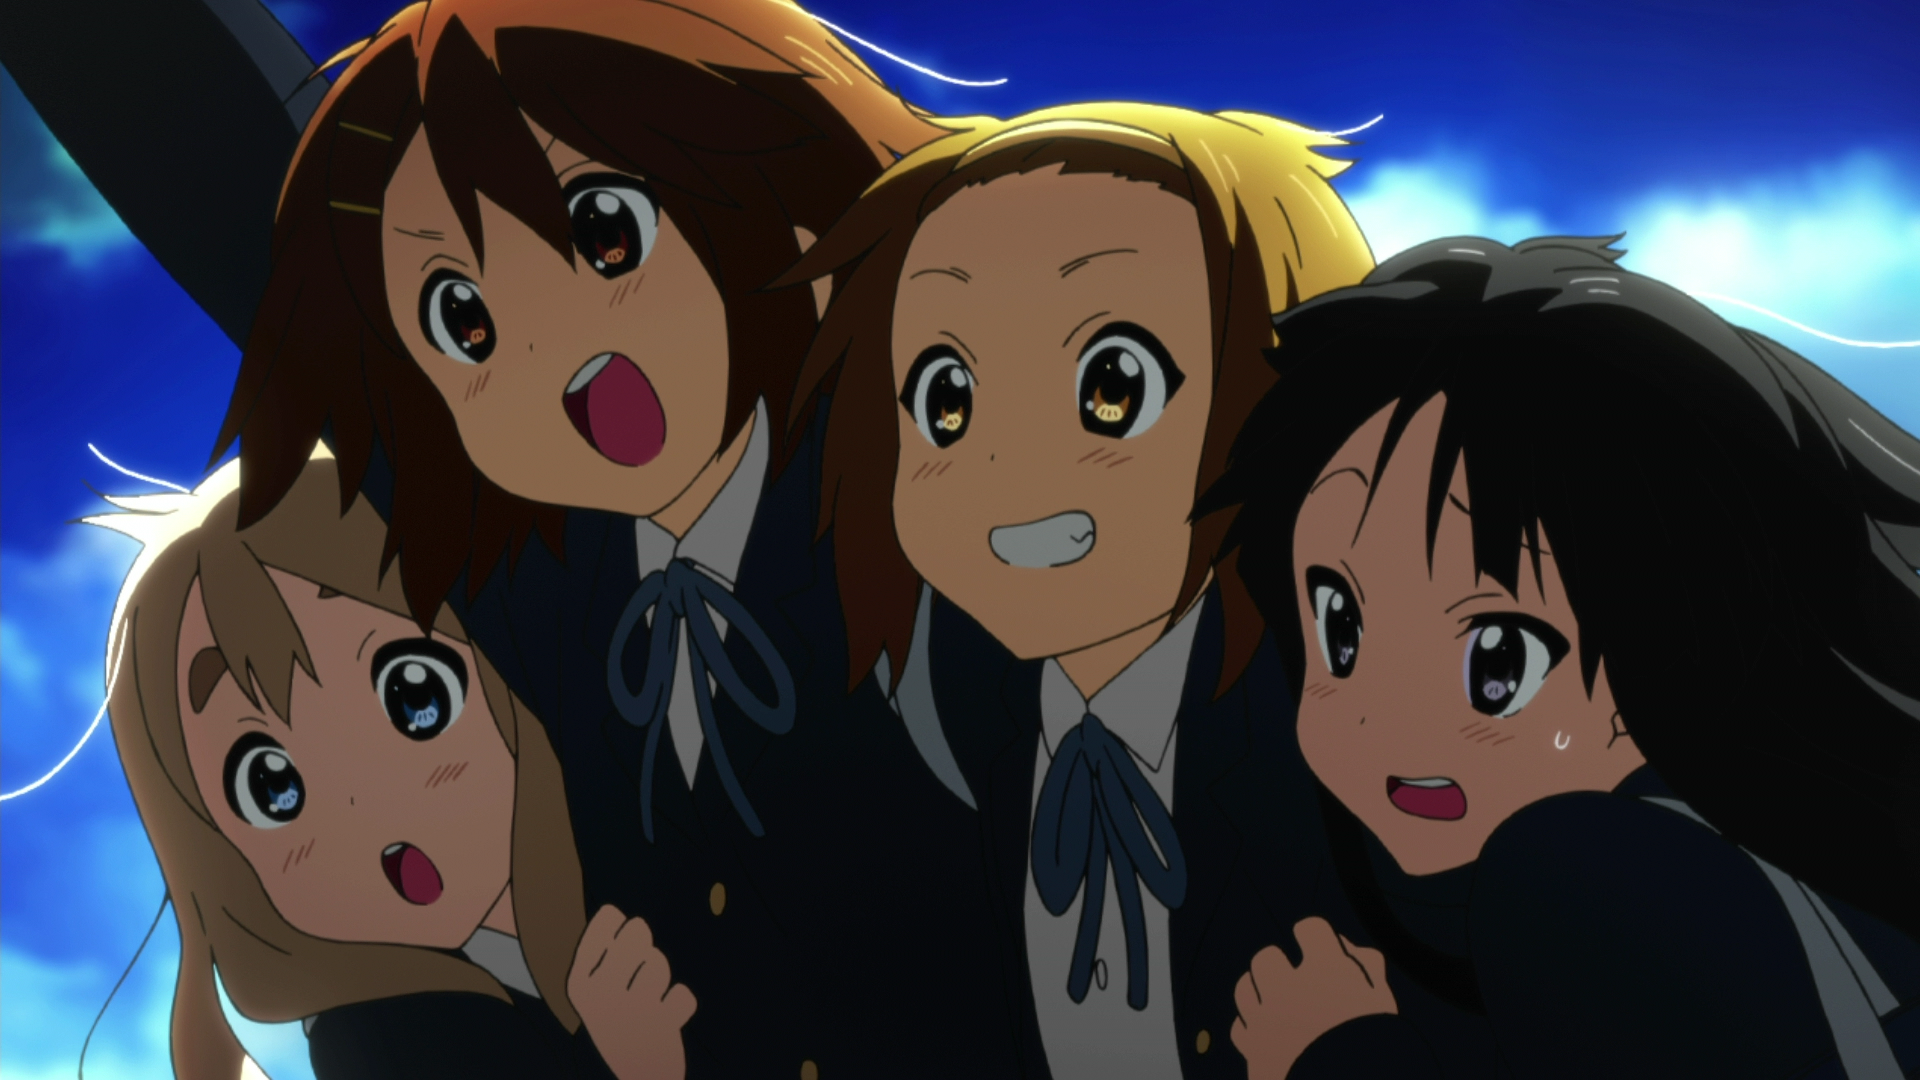 K-ON! (Кэйон!), школьная форма, Hirasawa Юи, Акияма Мио, Tainaka Ritsu, Kotobuki Tsumugi - обои на рабочий стол